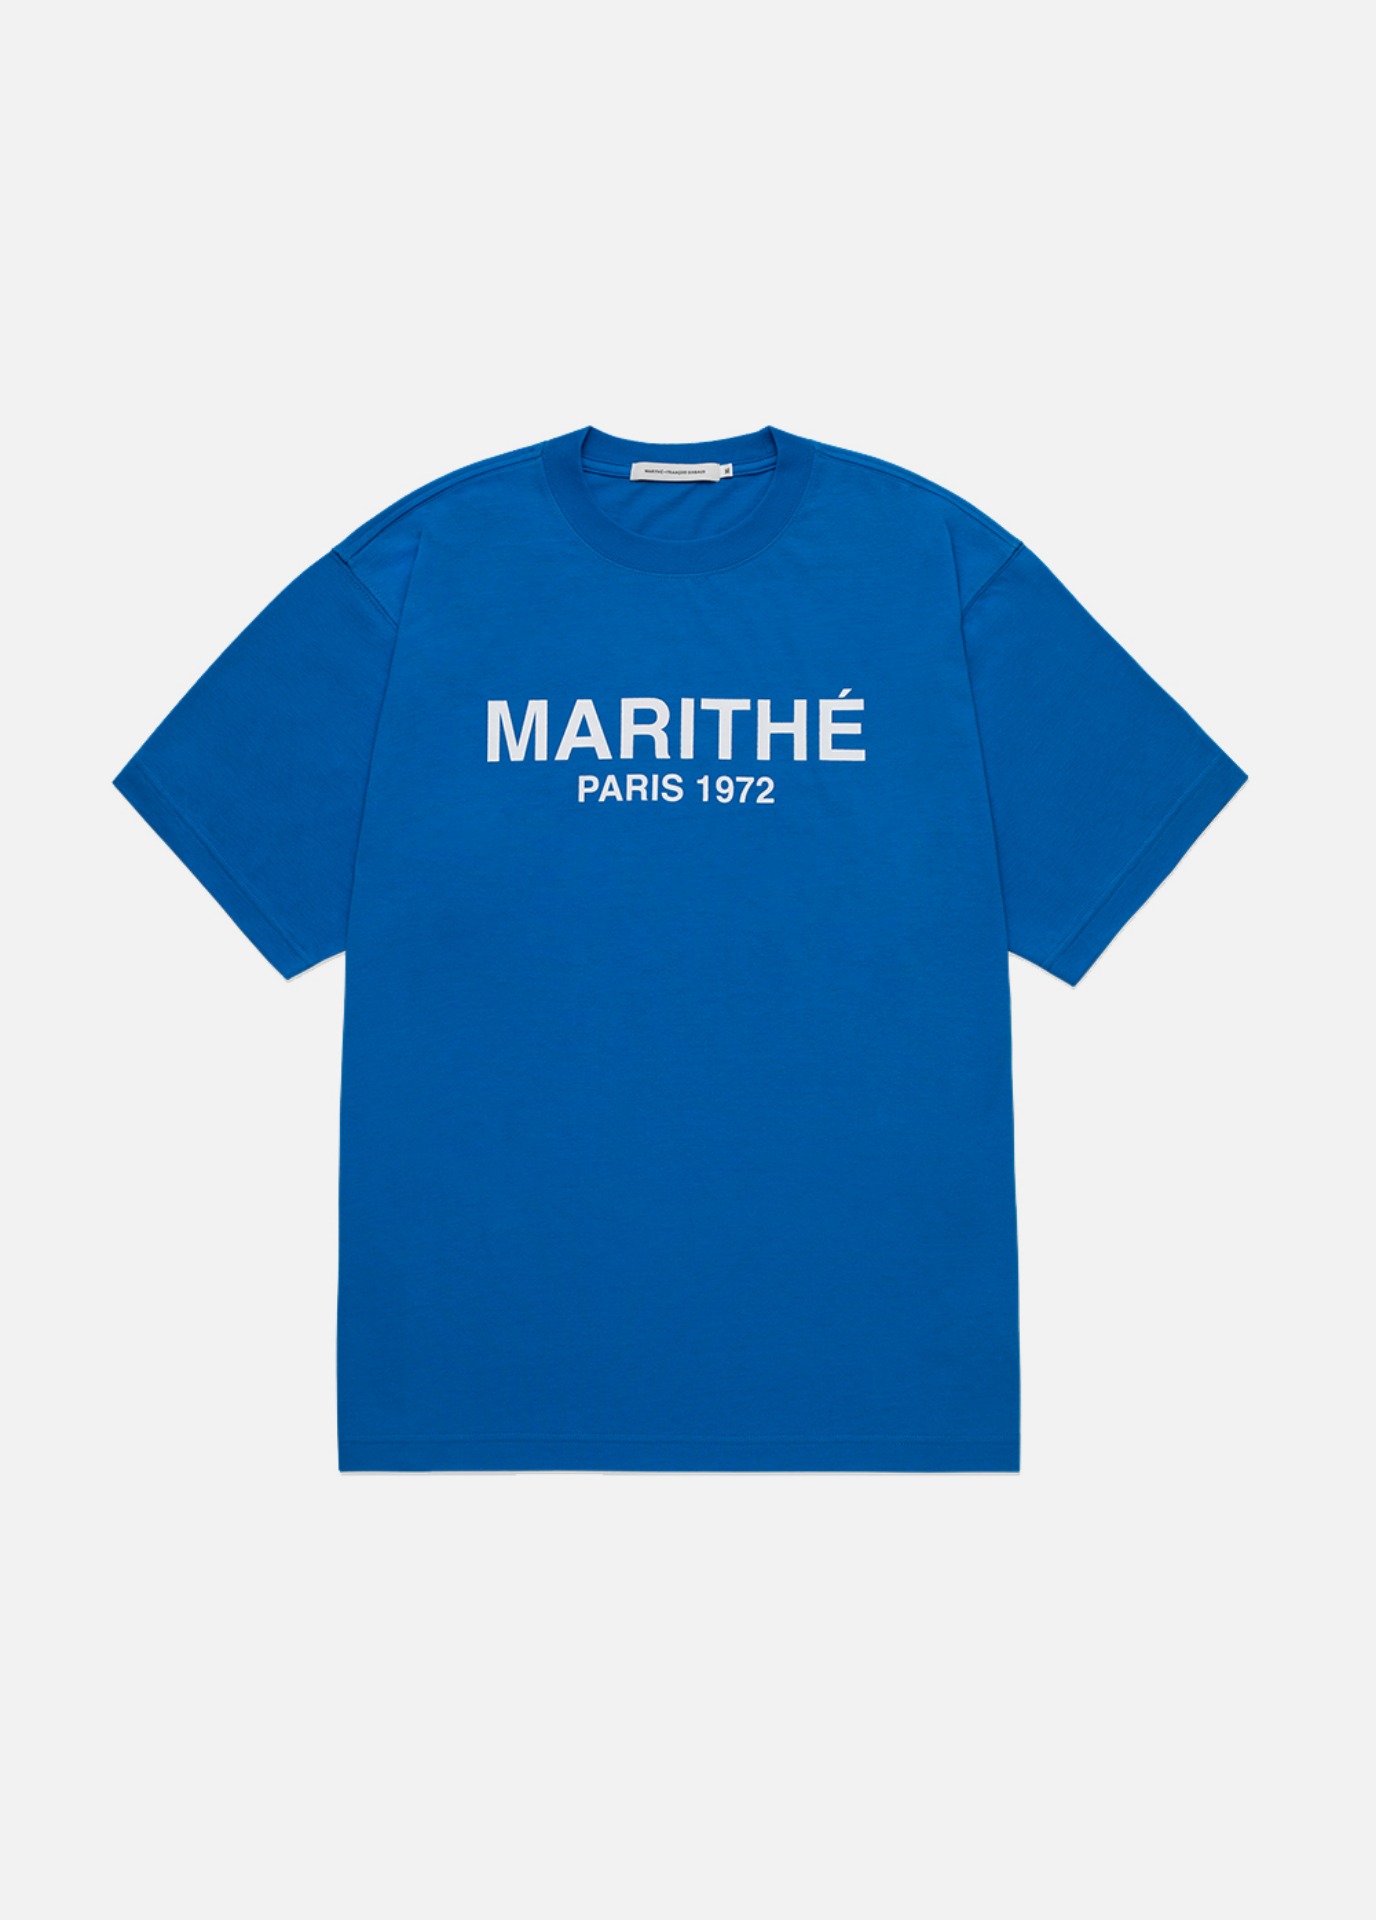 MARITHE REGULAR MARITHE TEE blue